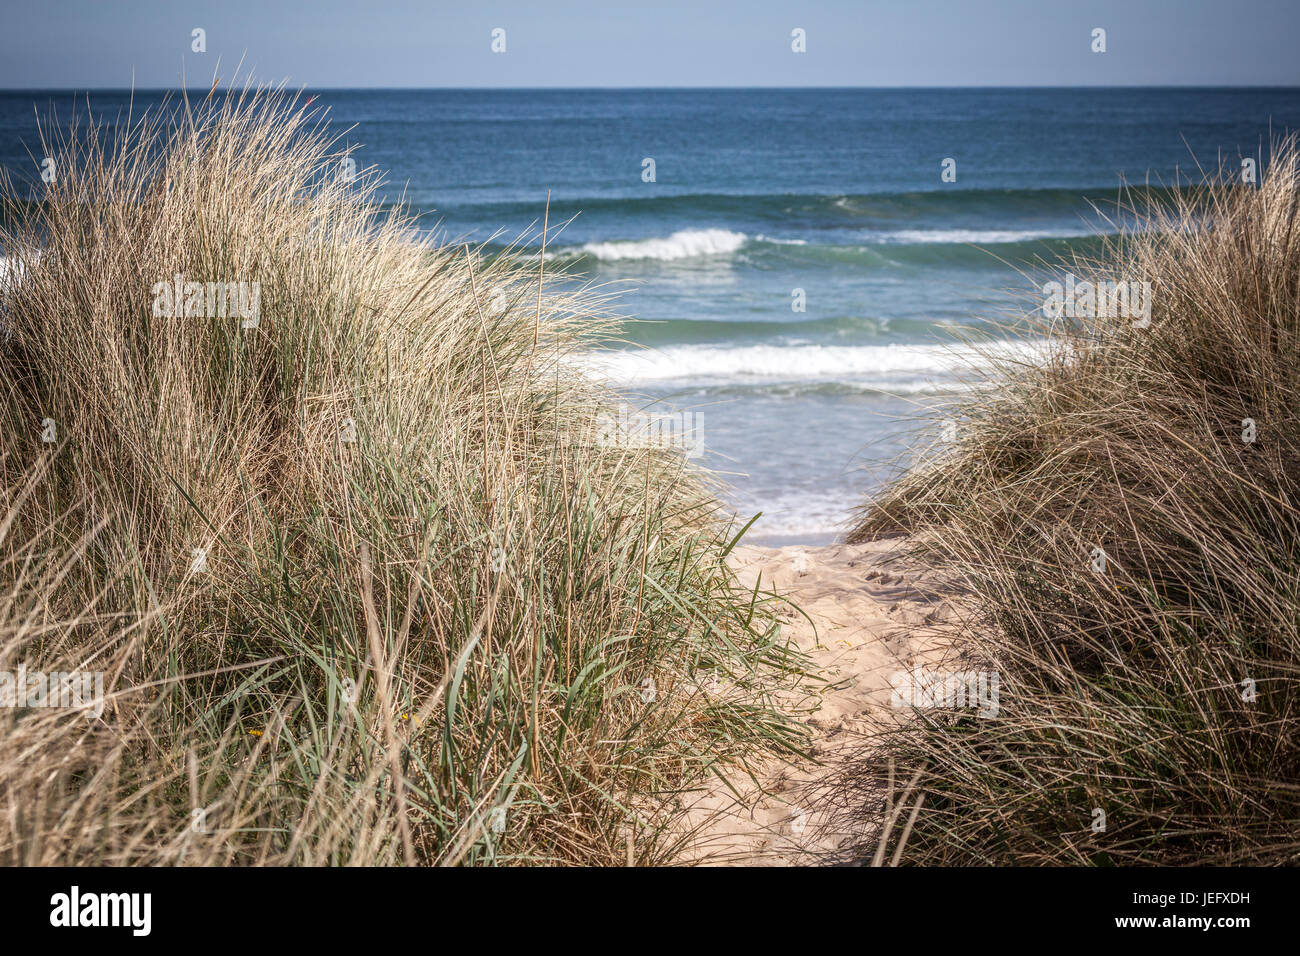 Views of the sand dunes on the Northumberland coast, England, UK, Europe. Stock Photo